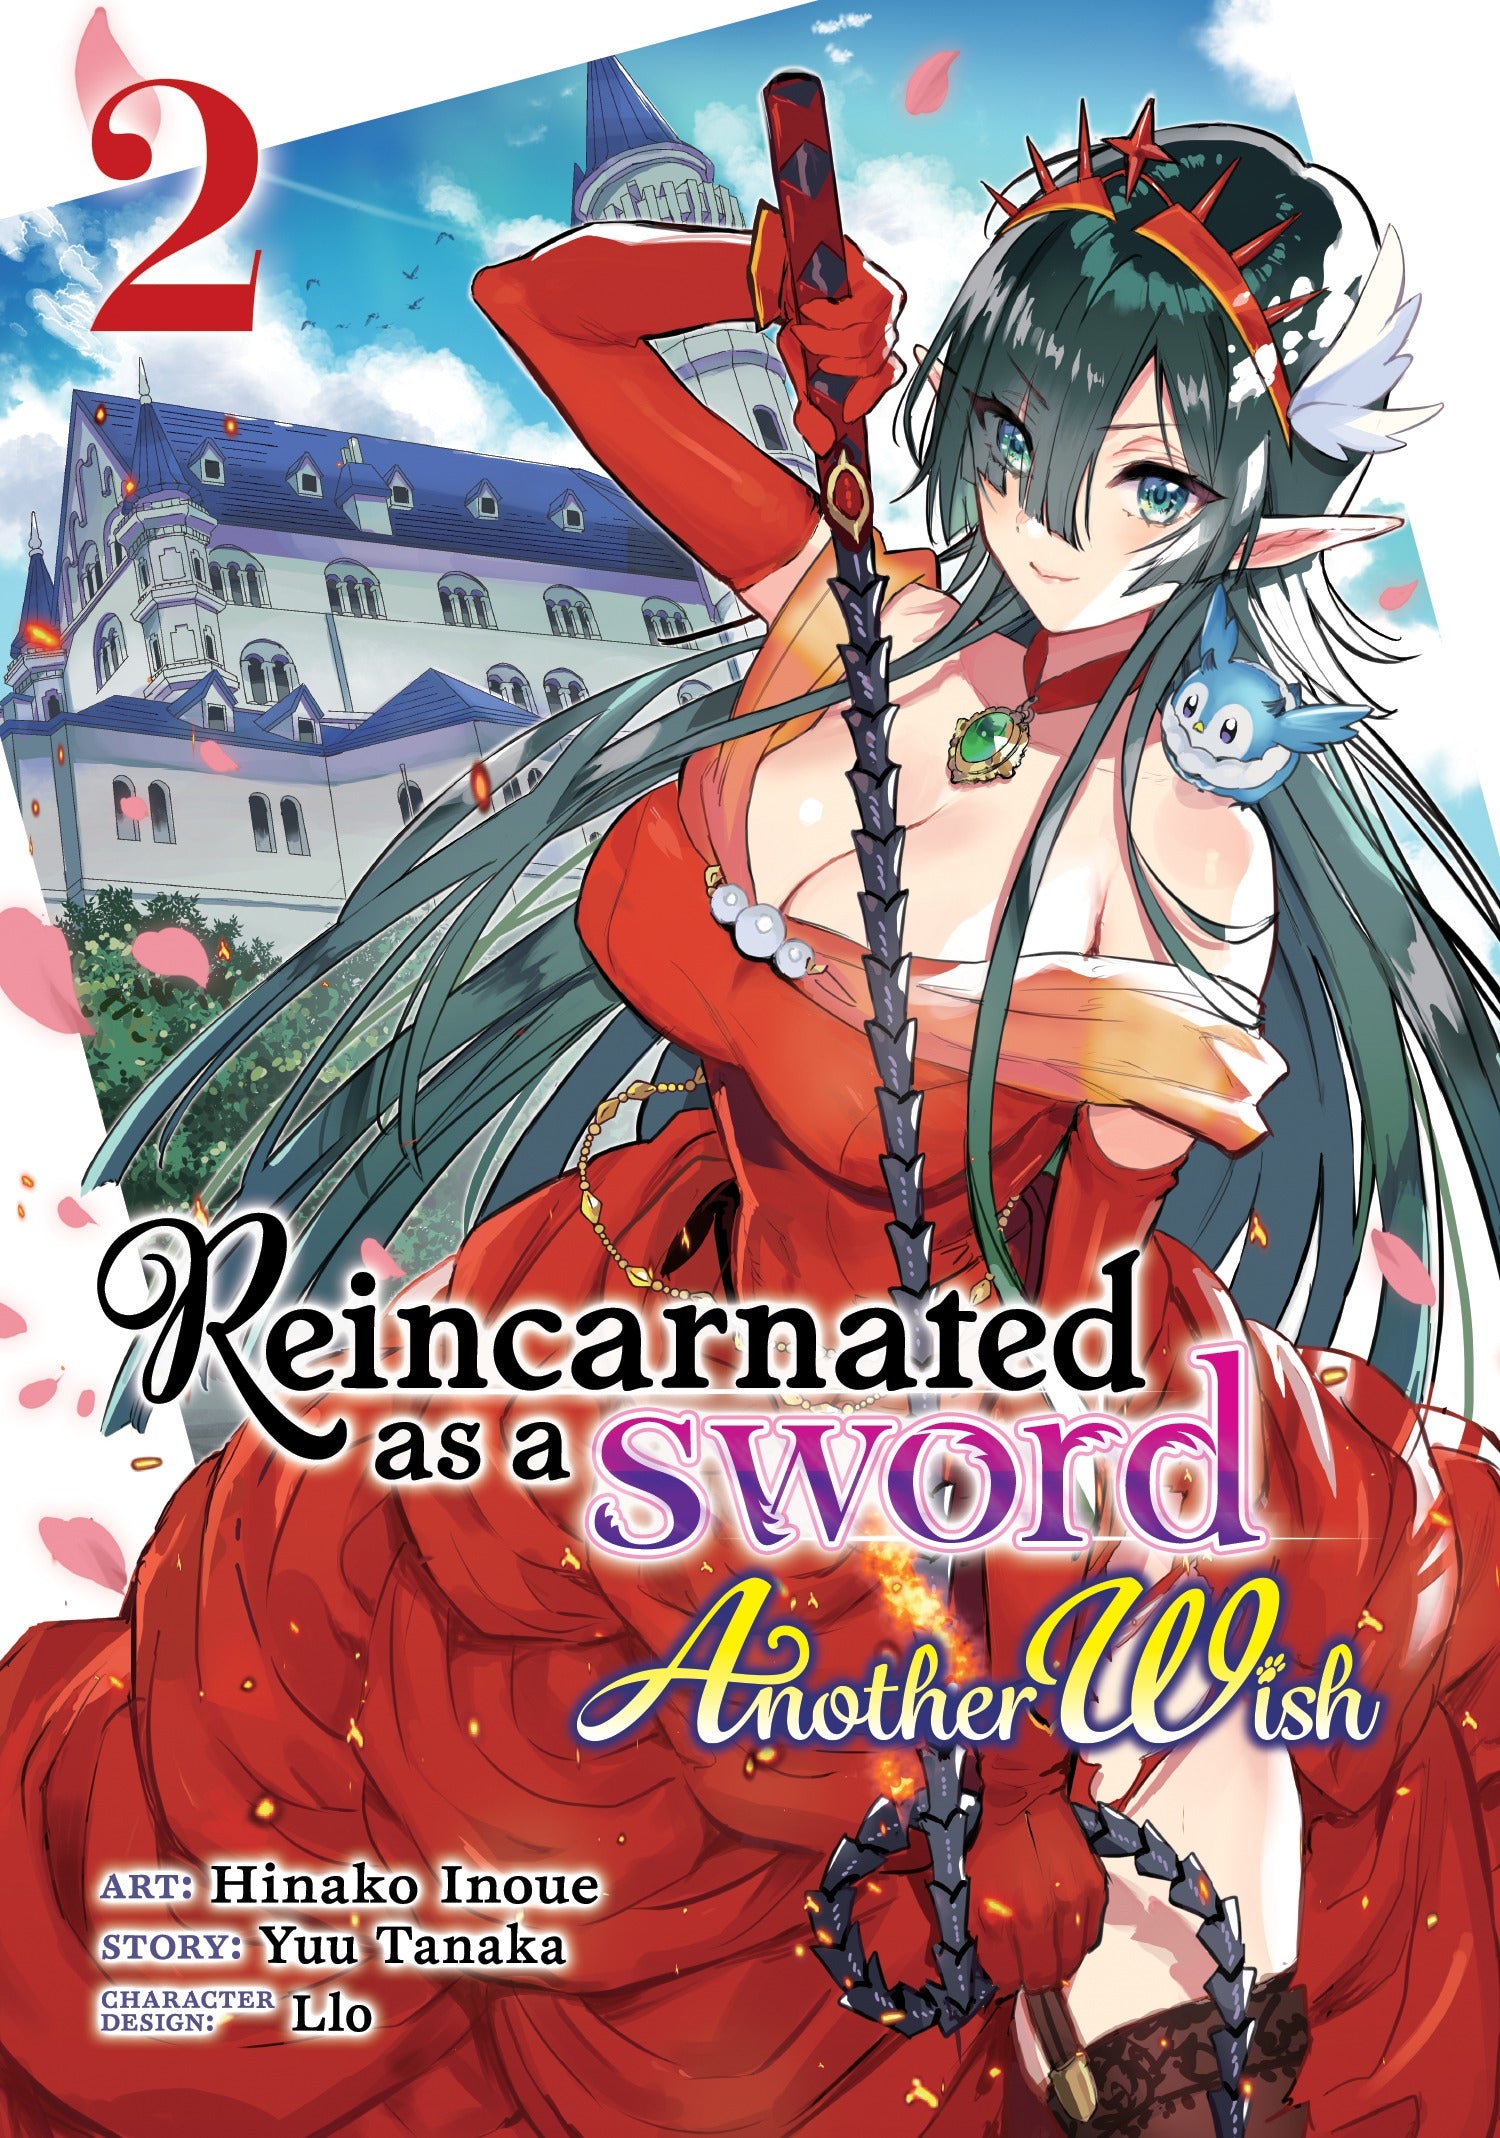 Reincarnated as a Sword Another Wish (Manga) Vol. 2